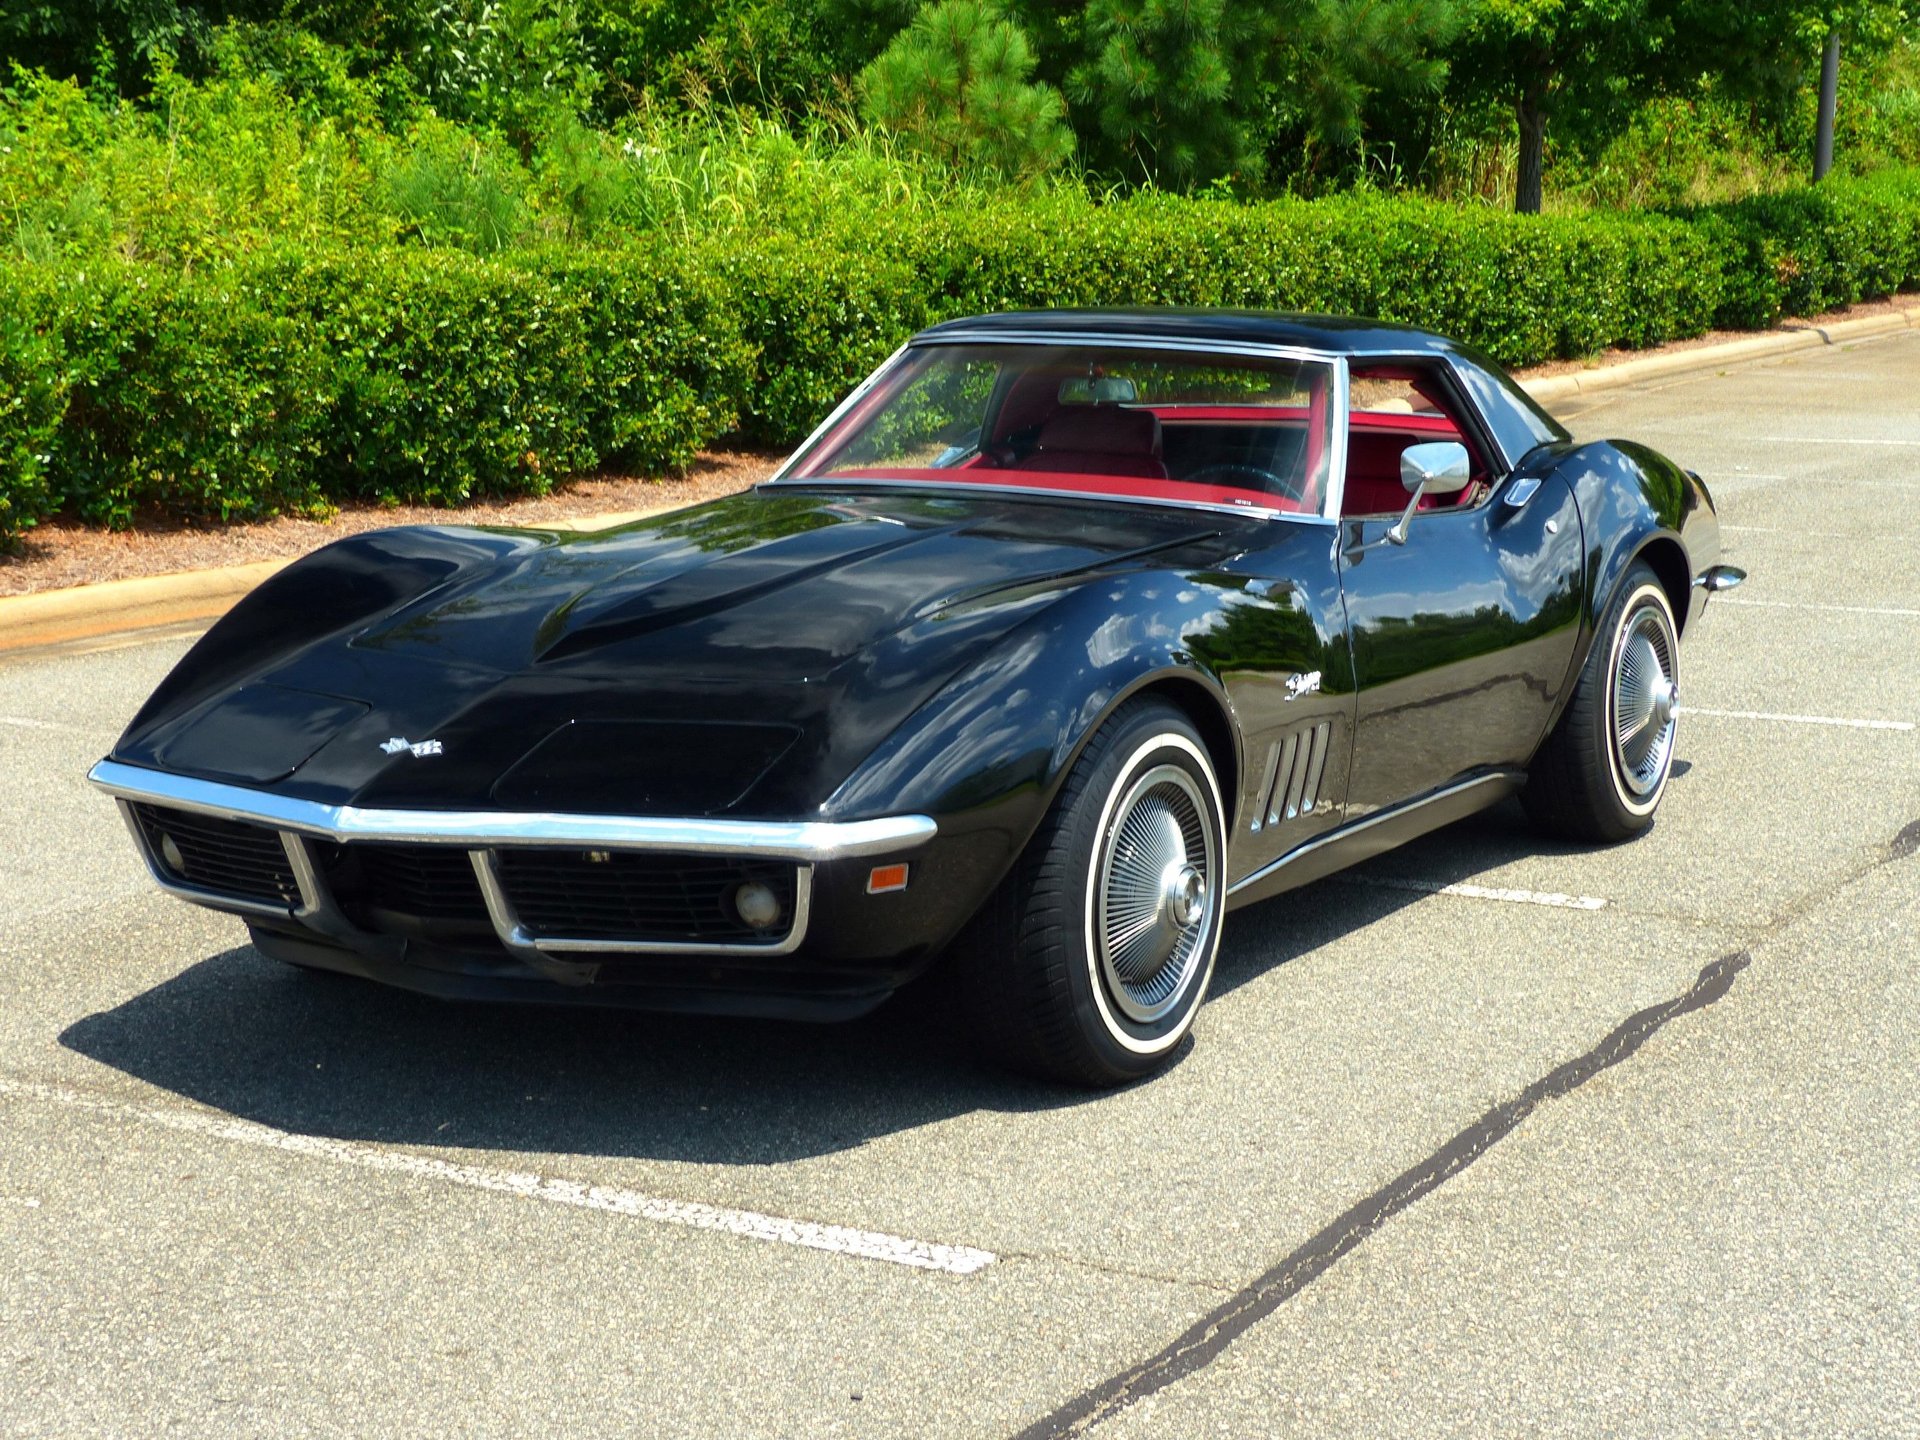 1969 Chevrolet Corvette | GAA Classic Cars